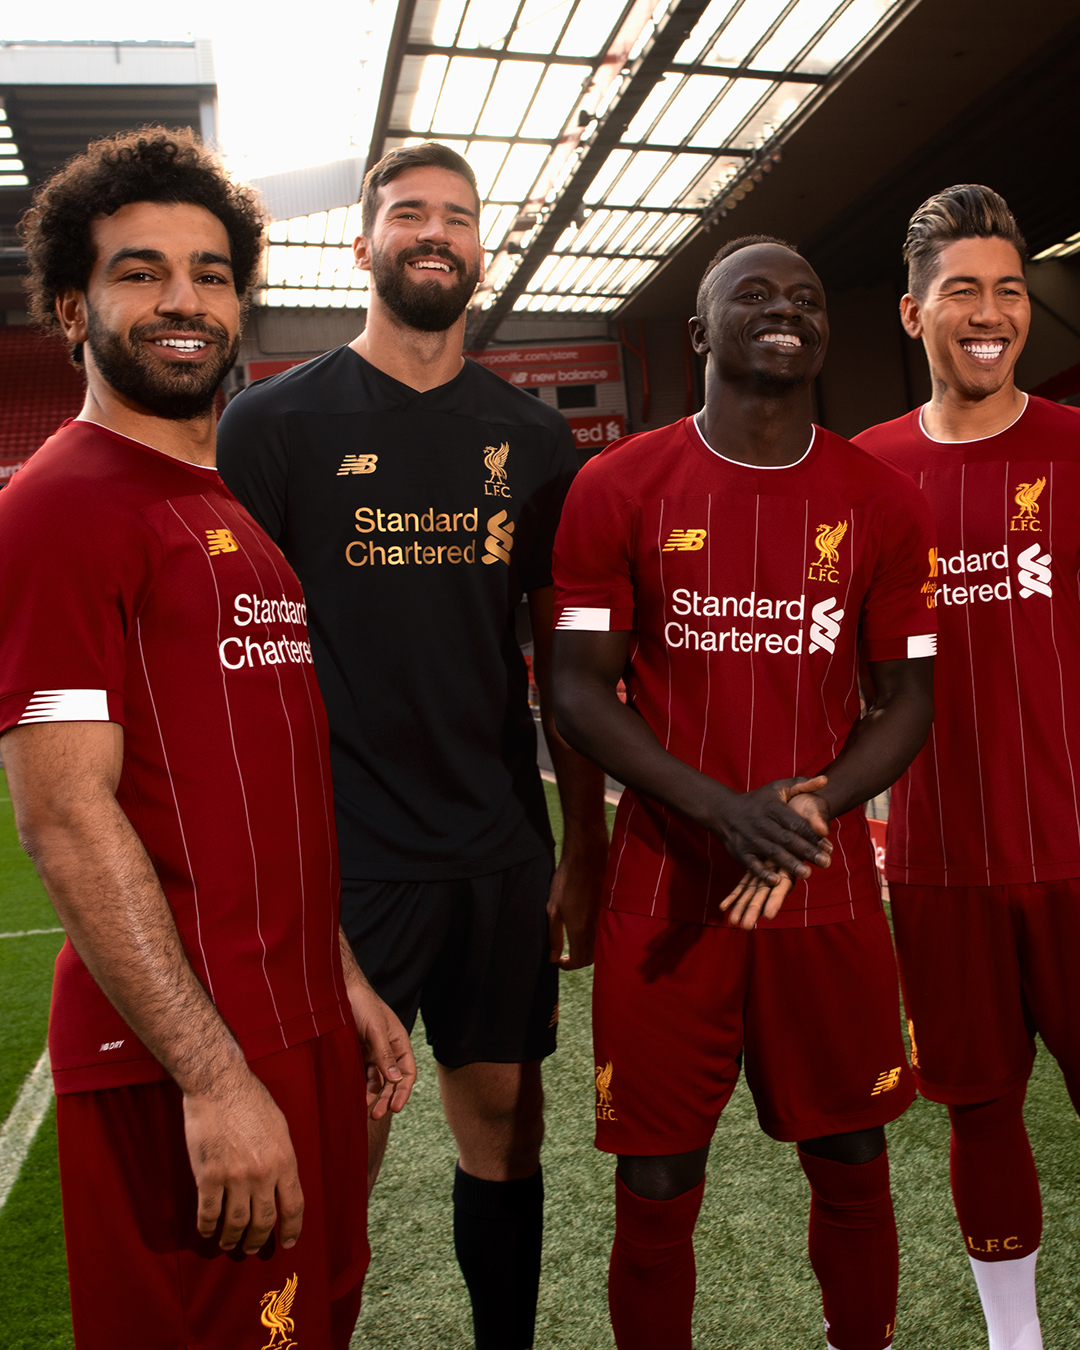 Liverpool thuisshirt 2019-2020 - Voetbalshirts.com1080 x 1350